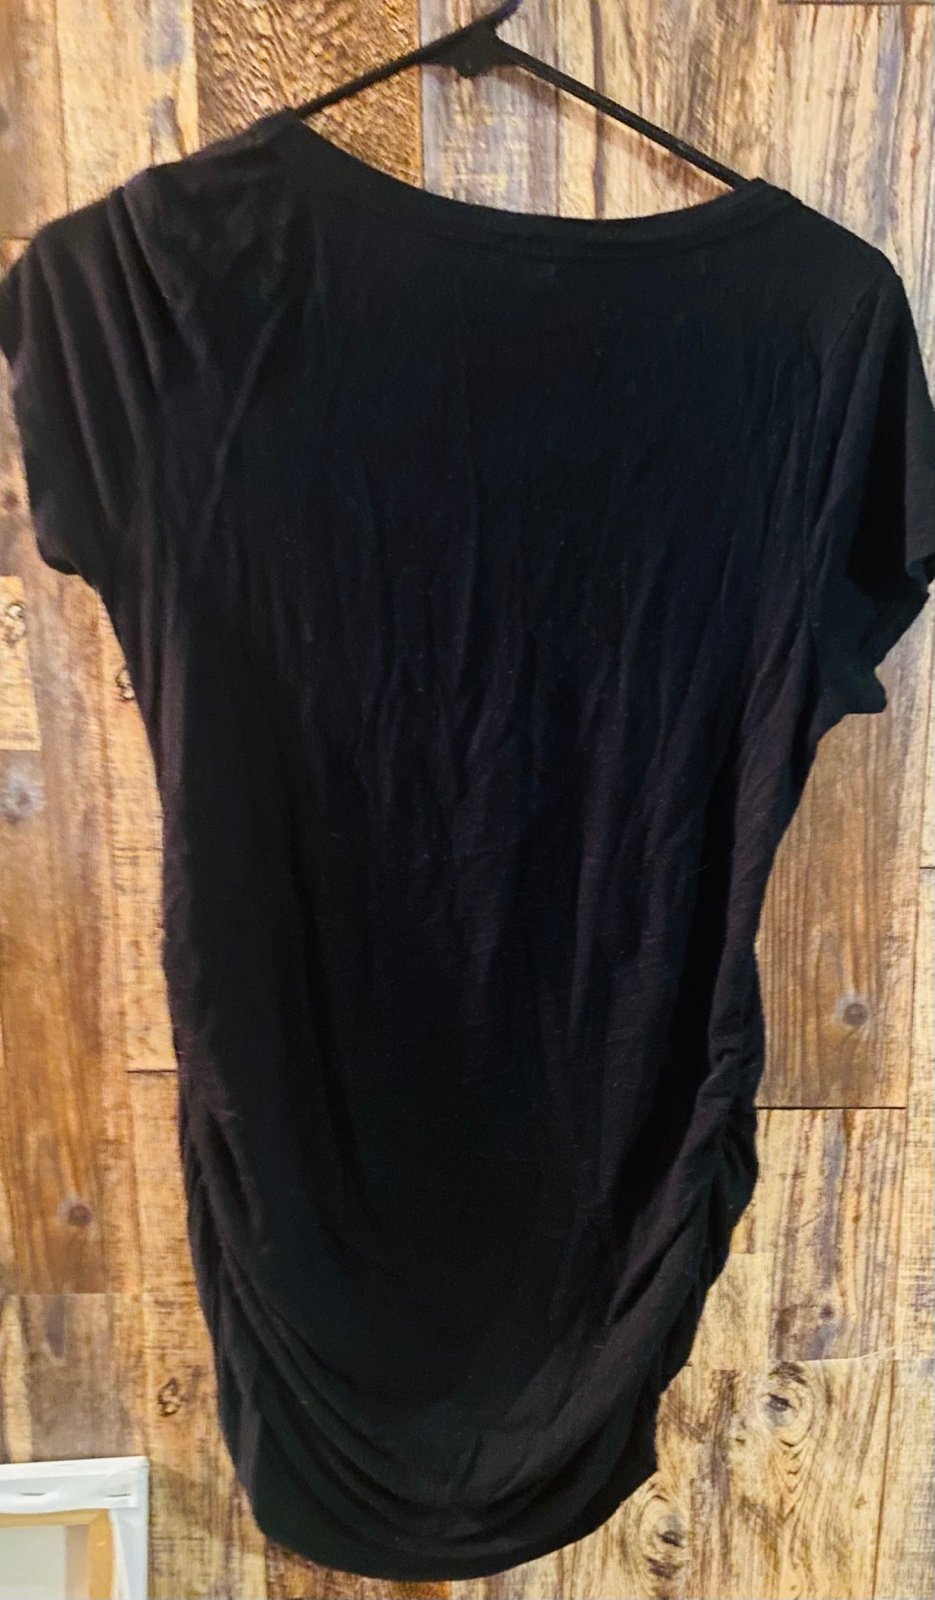 Great Mom & Co women´s maternity short sleeve T-shirt black size medium. JoPYGmJaJ Great